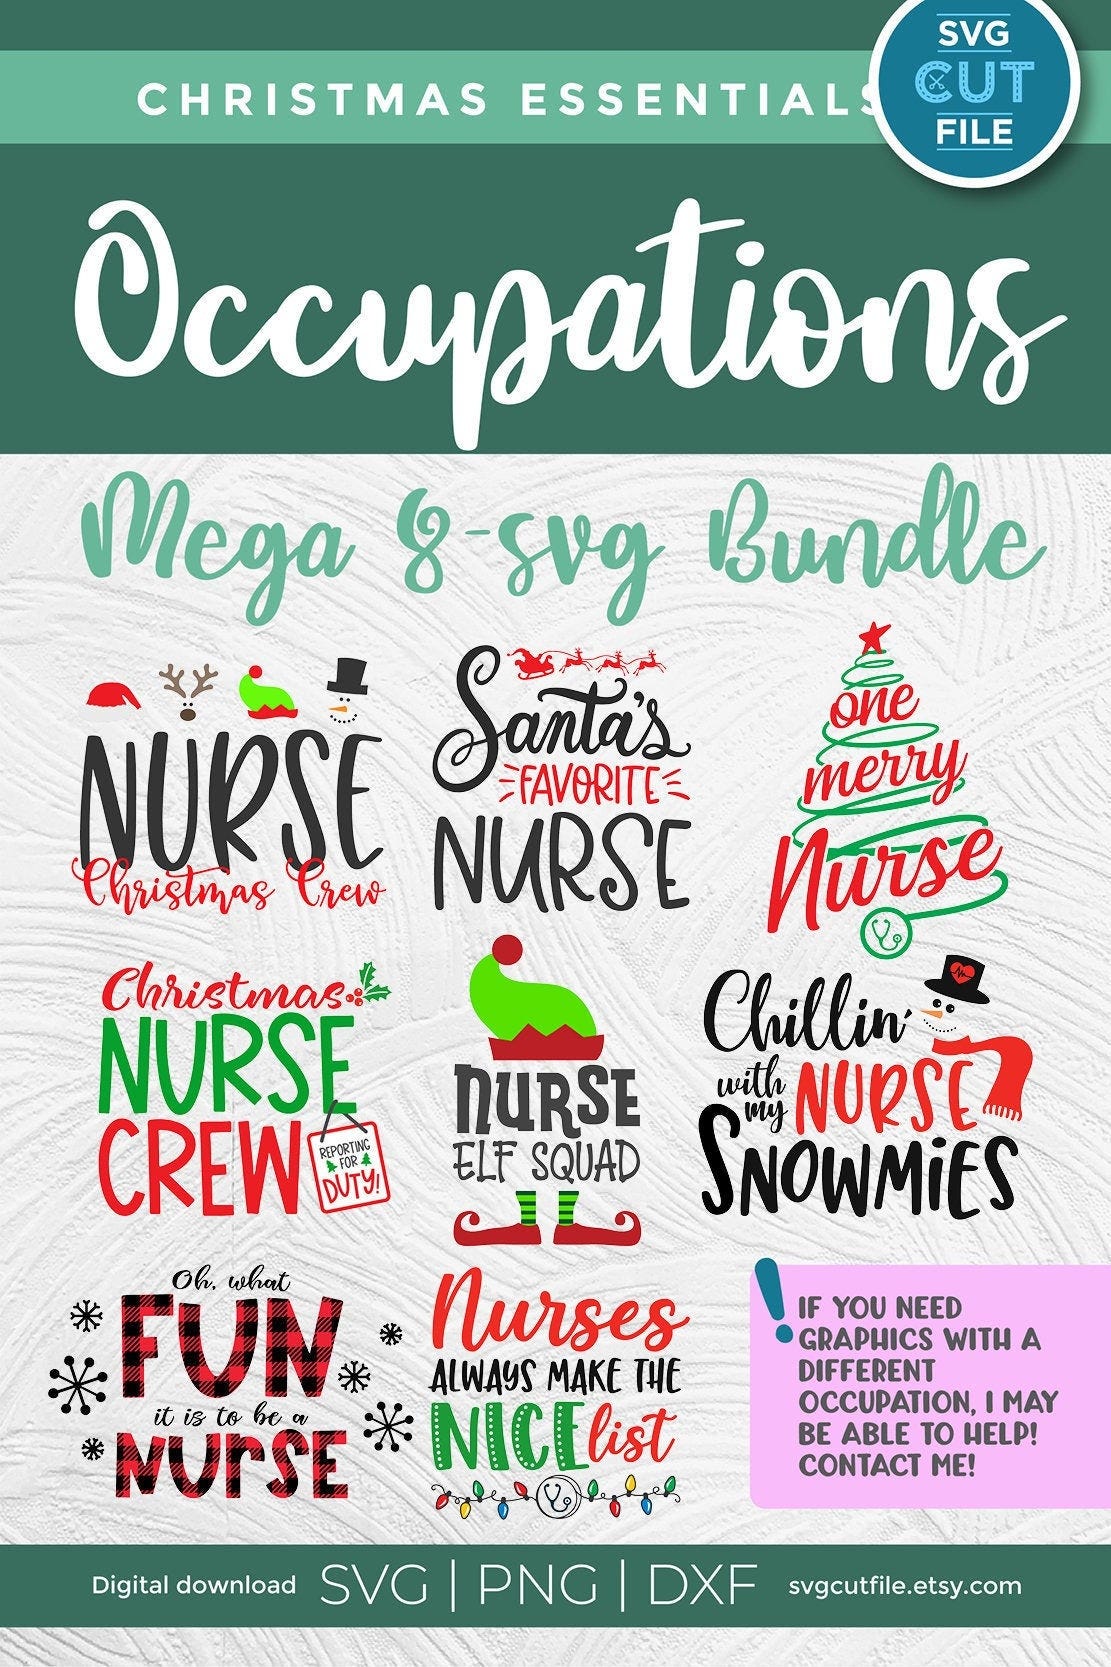 Christmas Nurse svg, bundle Elf, holiday nurse svg, dxf, xmas, one merry, RN LPN cna np, santa